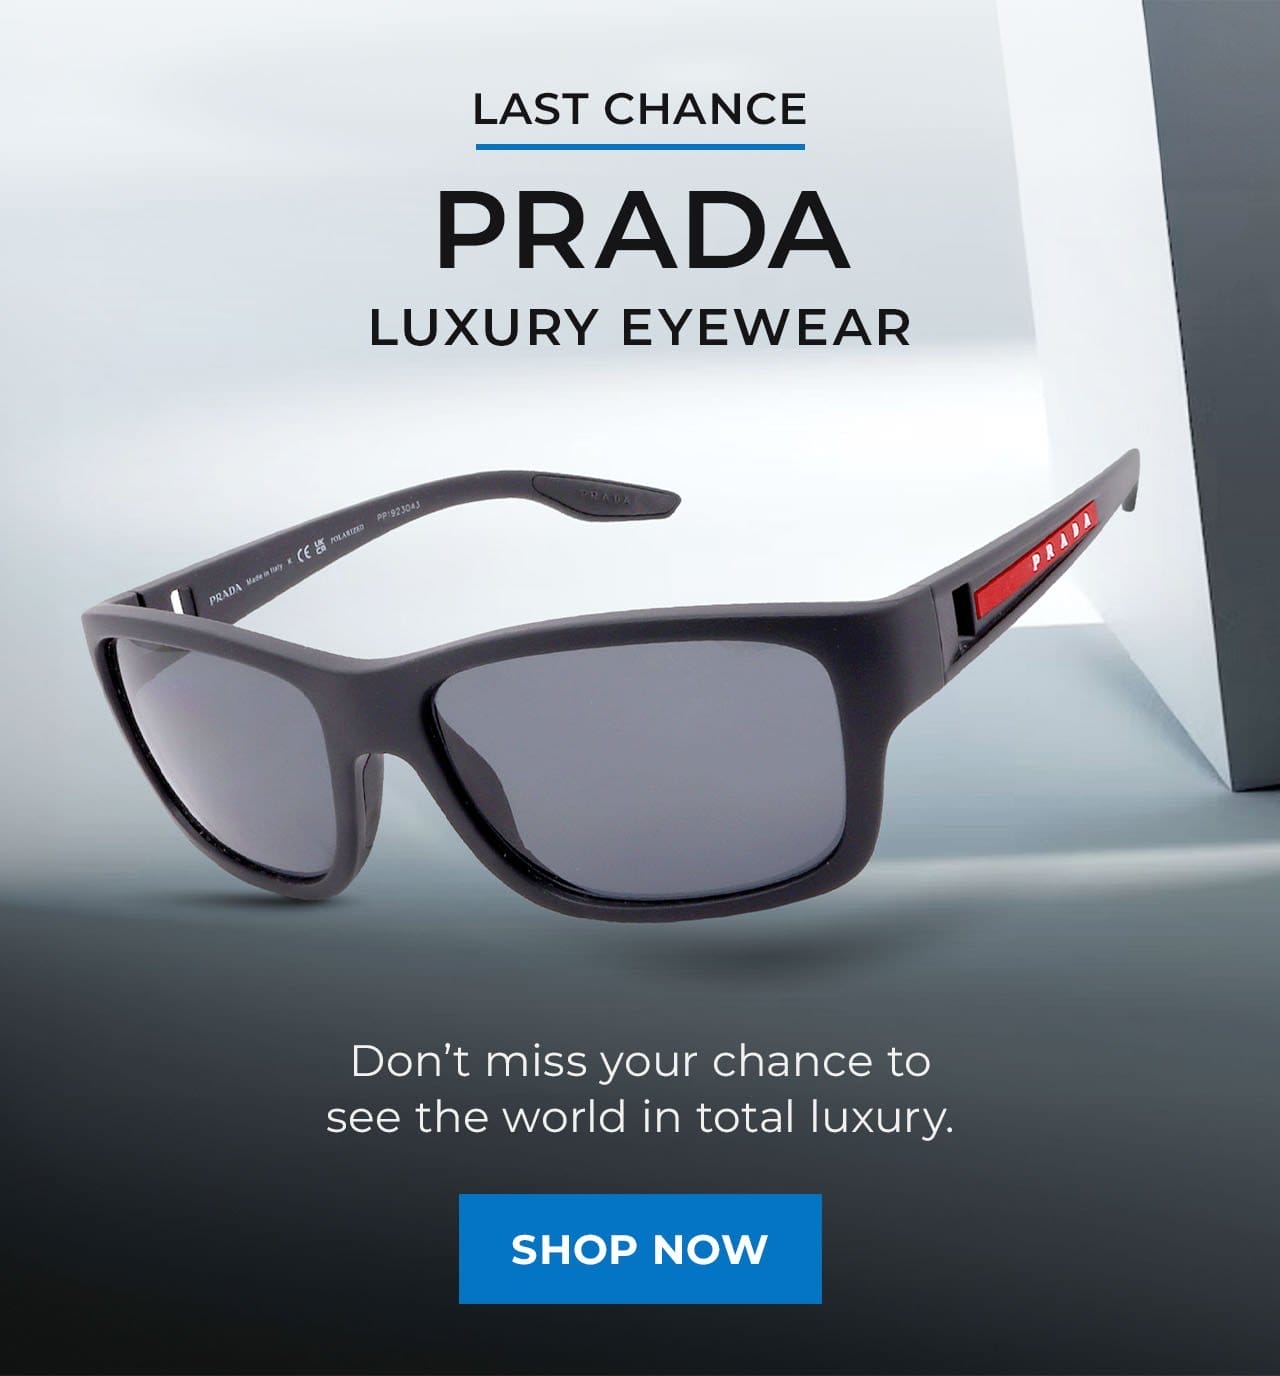 PRADA Luxury Eyewear | SHOP NOW